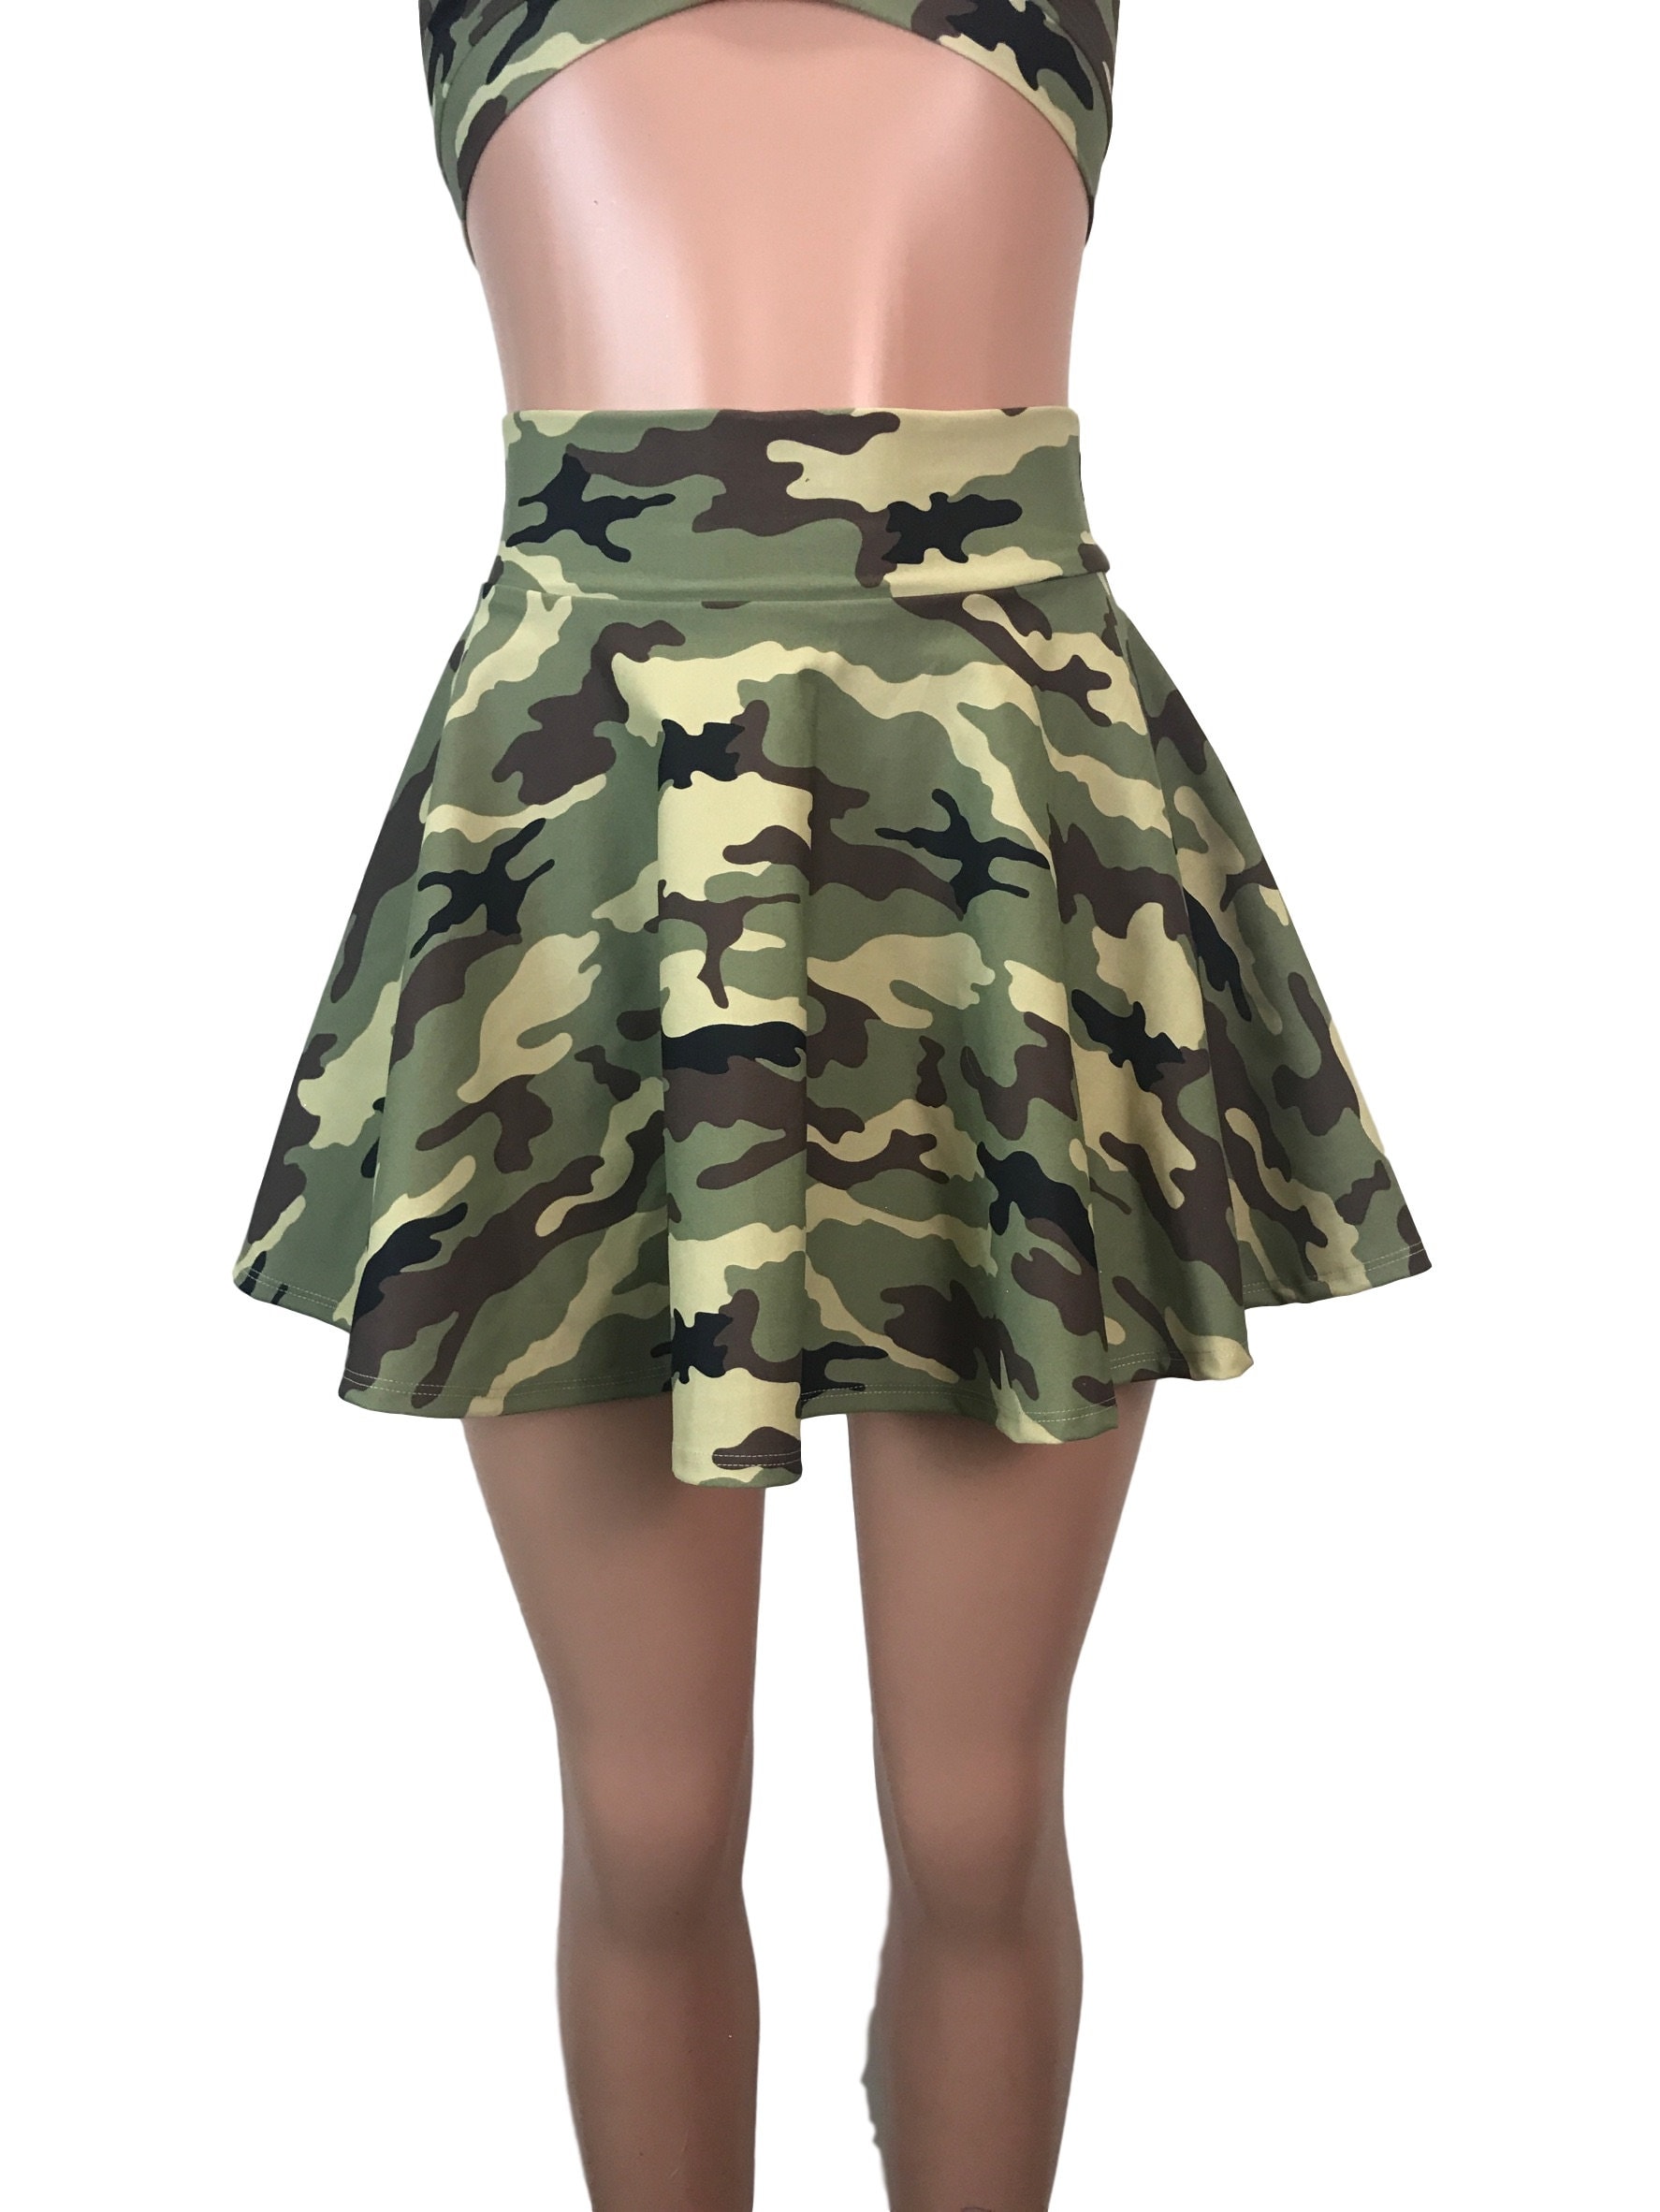 Camouflage Camo High Waisted Skater Skirt Clubwear Rave | Etsy